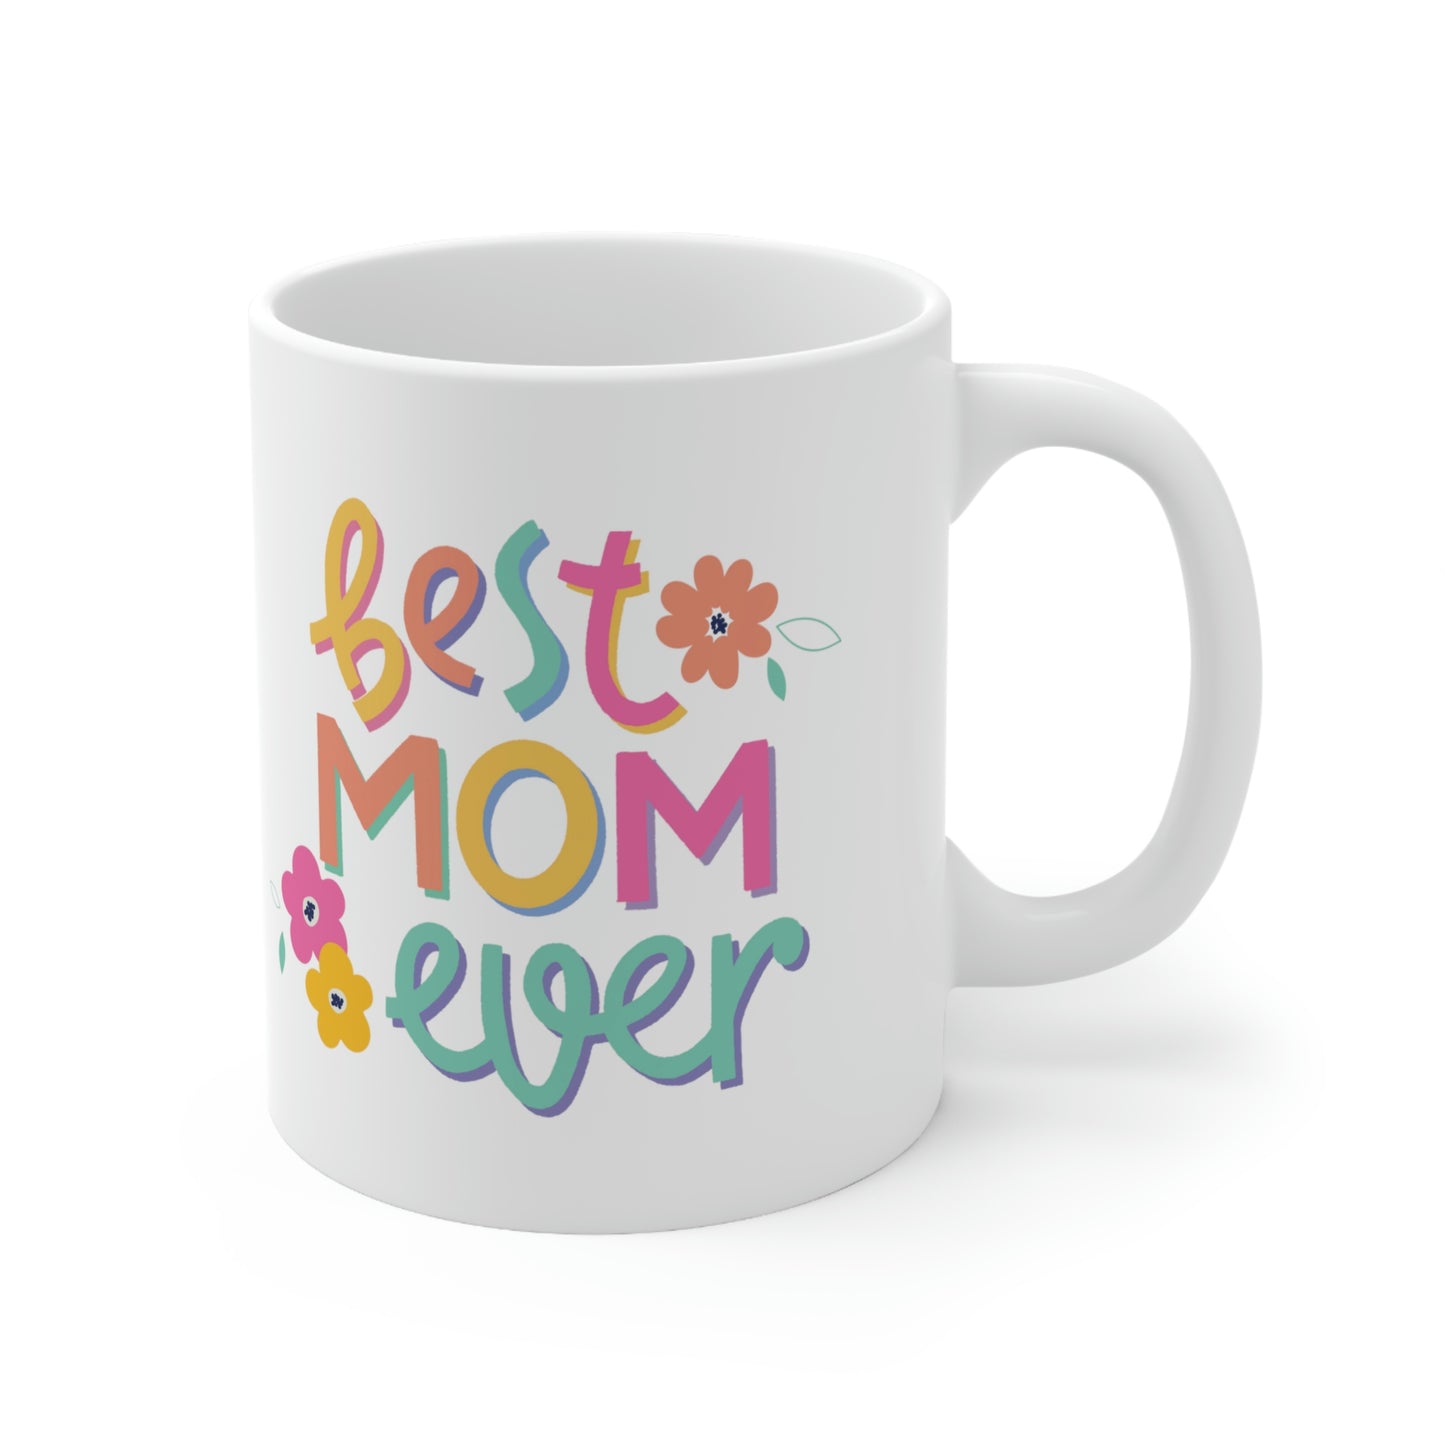 Best Mom Ever Ceramic Mug 11oz, Mothers Day Gift